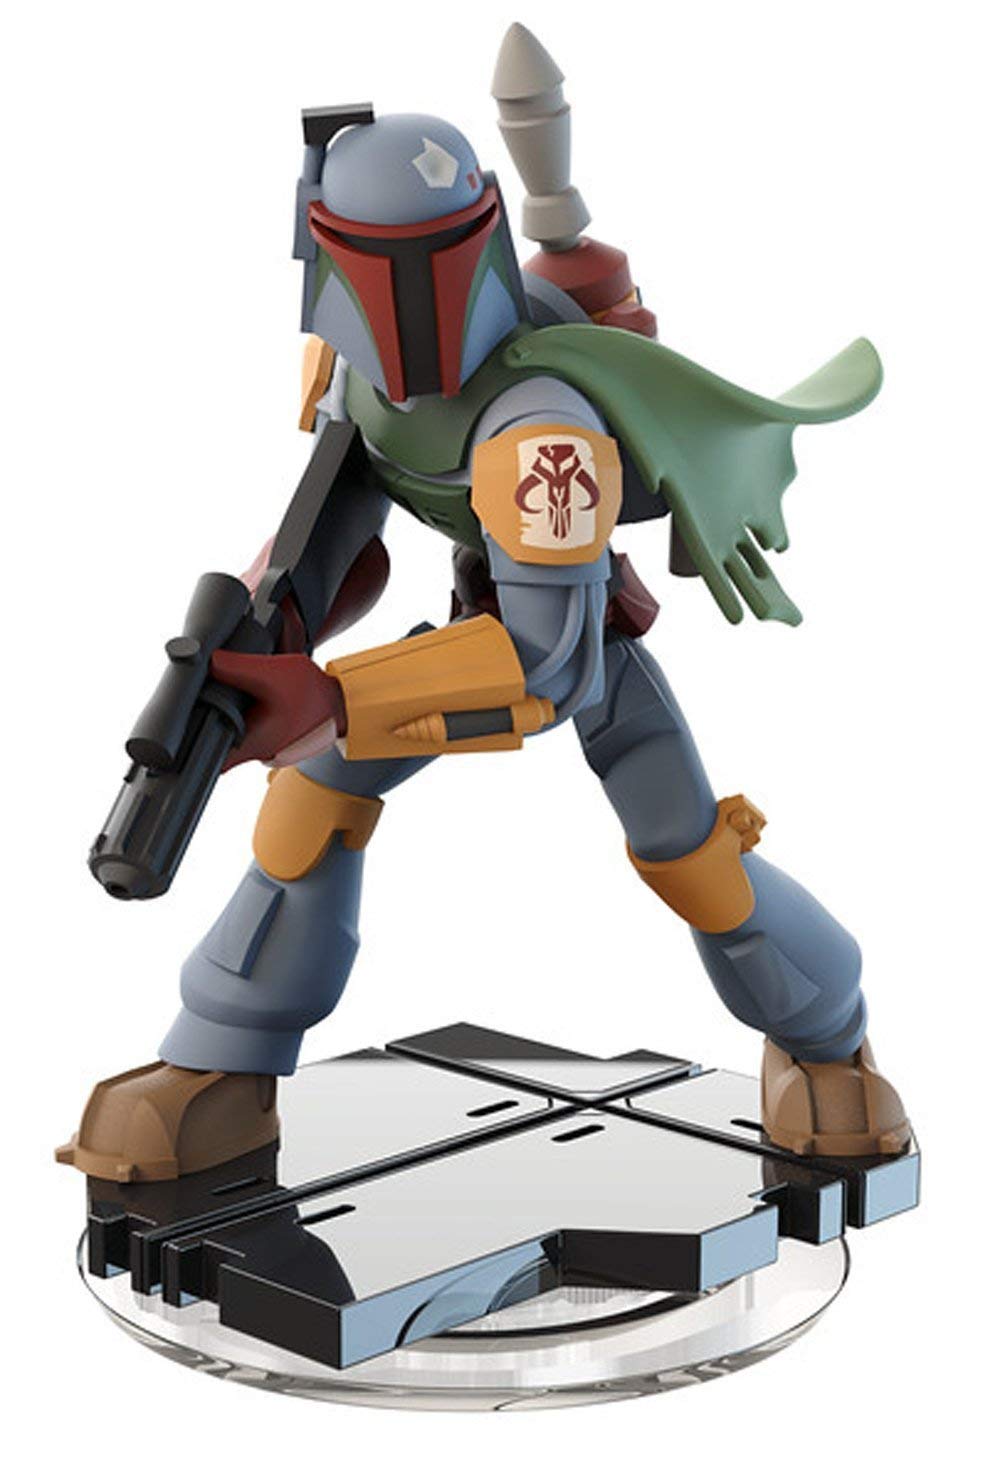 Disney INFINITY 3.0 Edition: Star Wars The Force Awakens Poe Dameron Figure & 3.0 Edition: Star Wars Boba Fett Figure